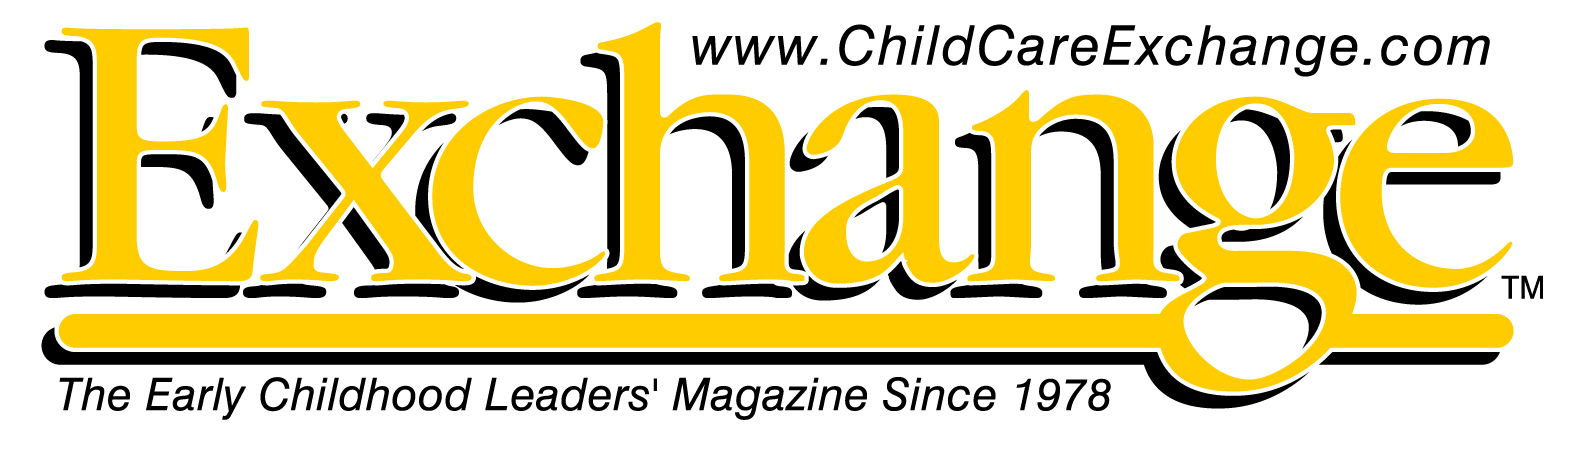 Childcare_exchange_logo_USA